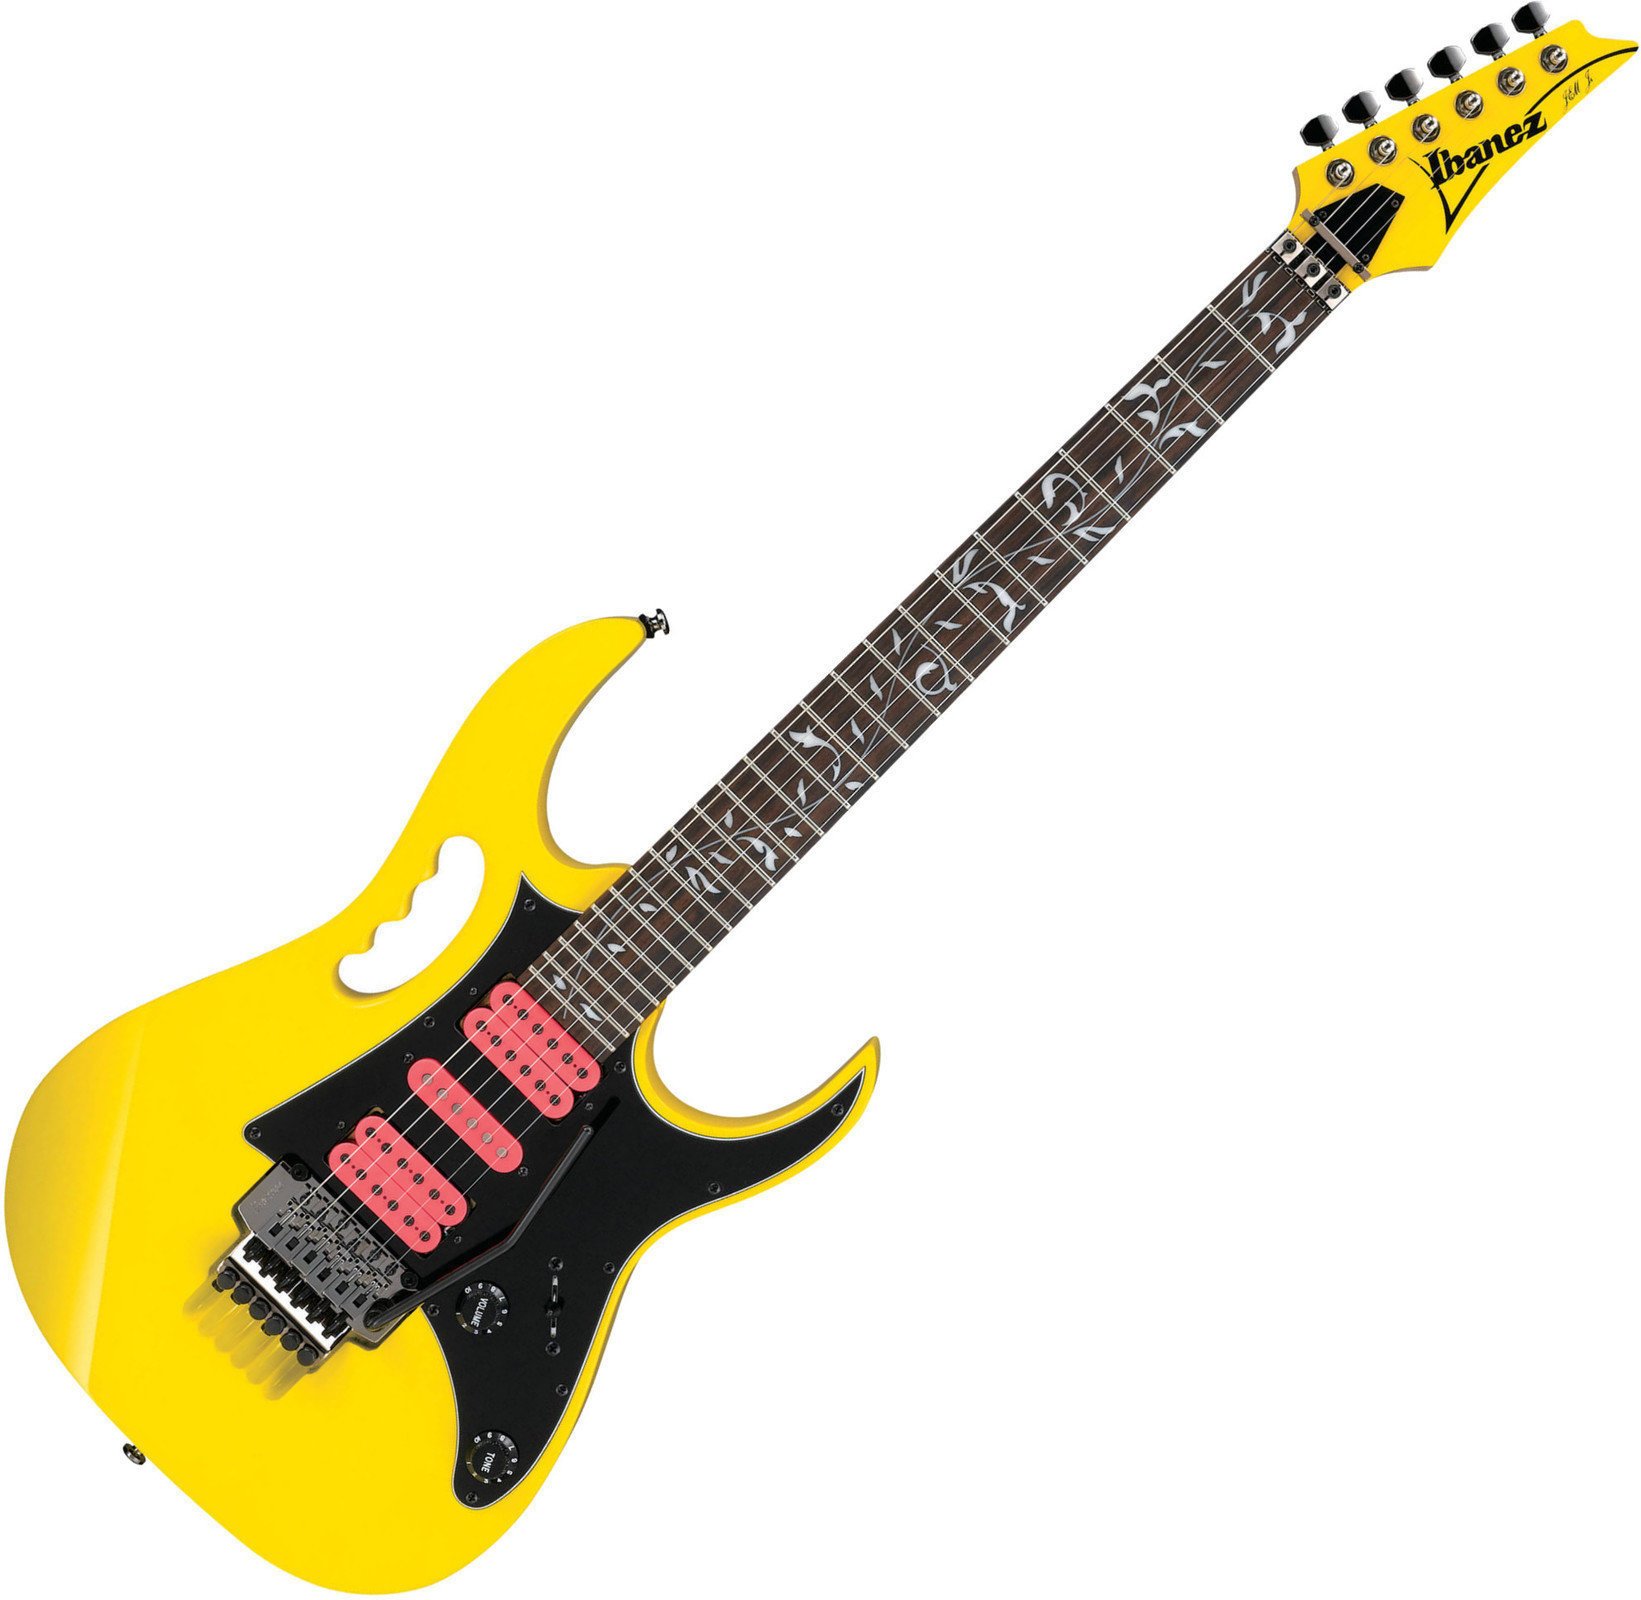 Elektrisk gitarr Ibanez JEMJRSP-YE Yellow